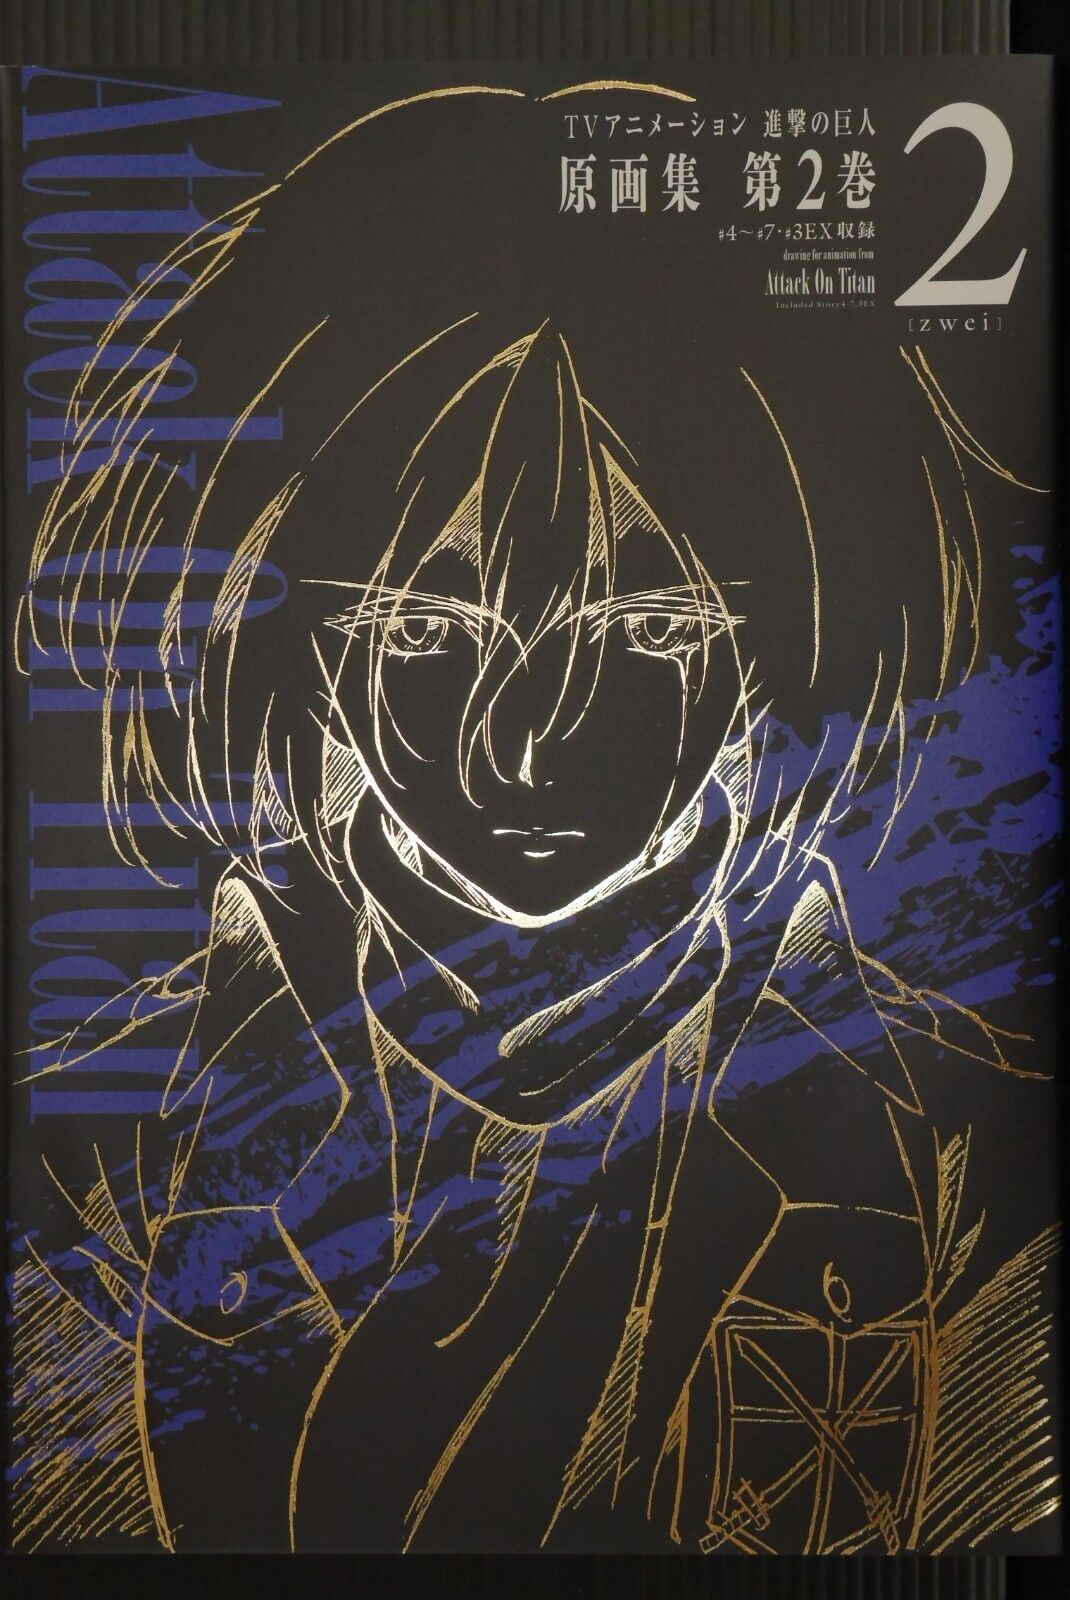 SHOHAN Drawing for Animation From Attack on Titan: Shingeki no Kyojin 2 Art Book